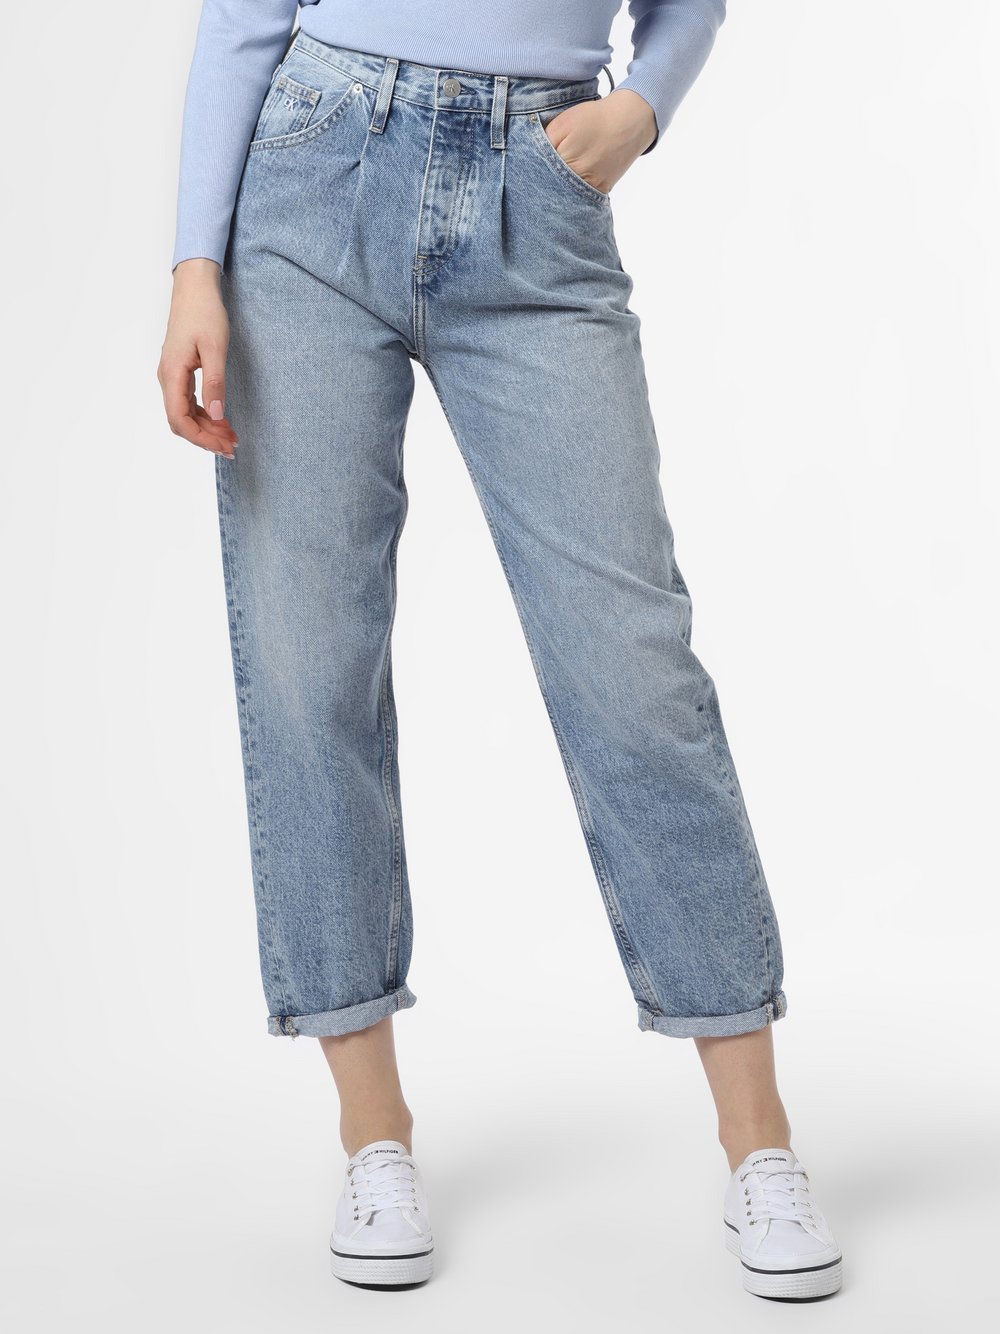 Calvin Klein Jeans - Jeansy damskie – Baggy Jean, niebieski